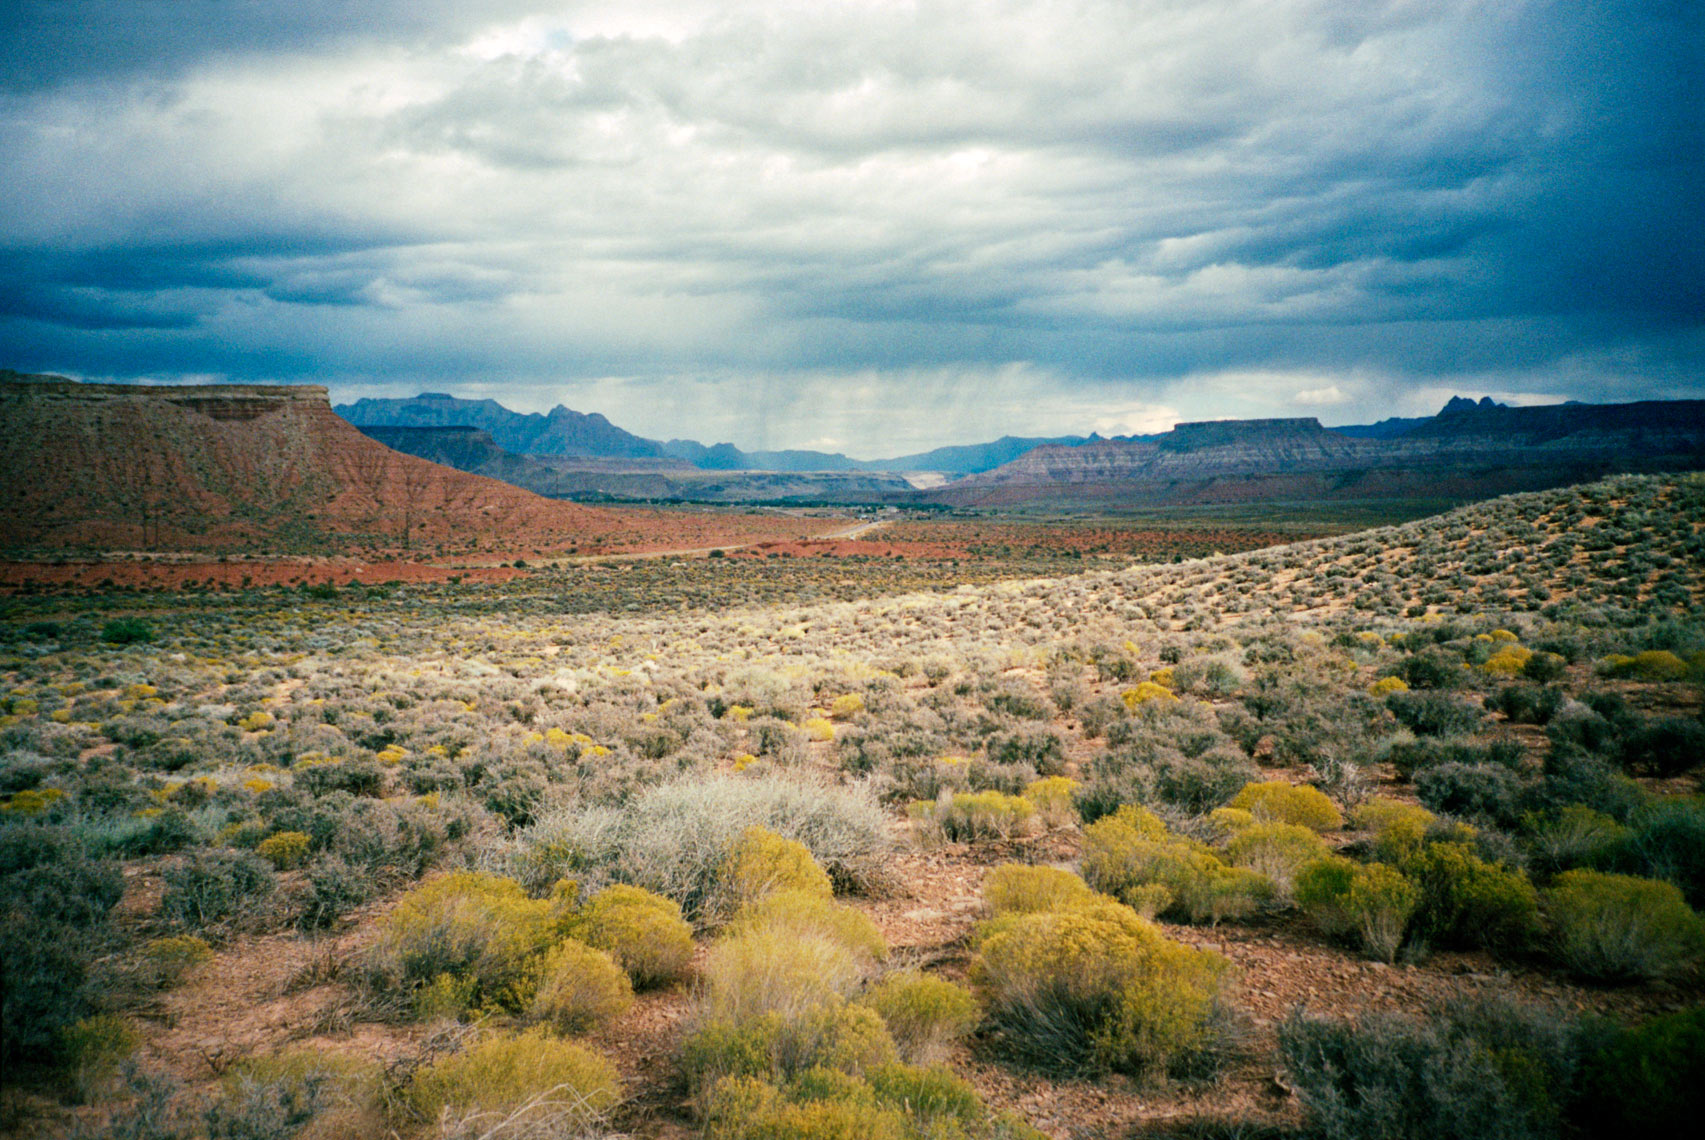 view from La Verkin Utah looking towards Zion National Park